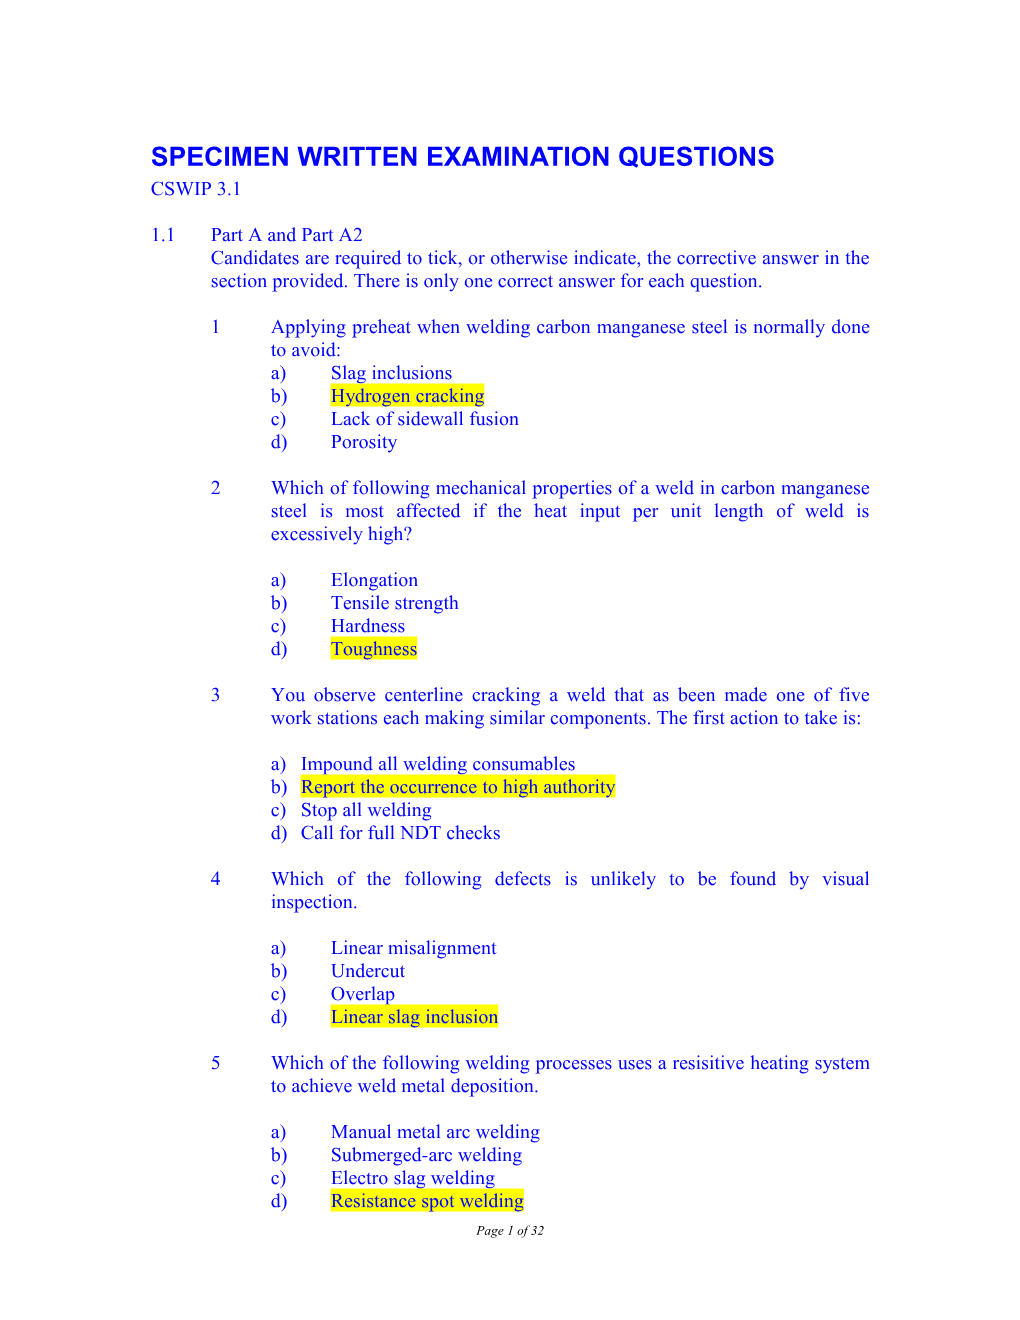 Specimen Written Examination Questions